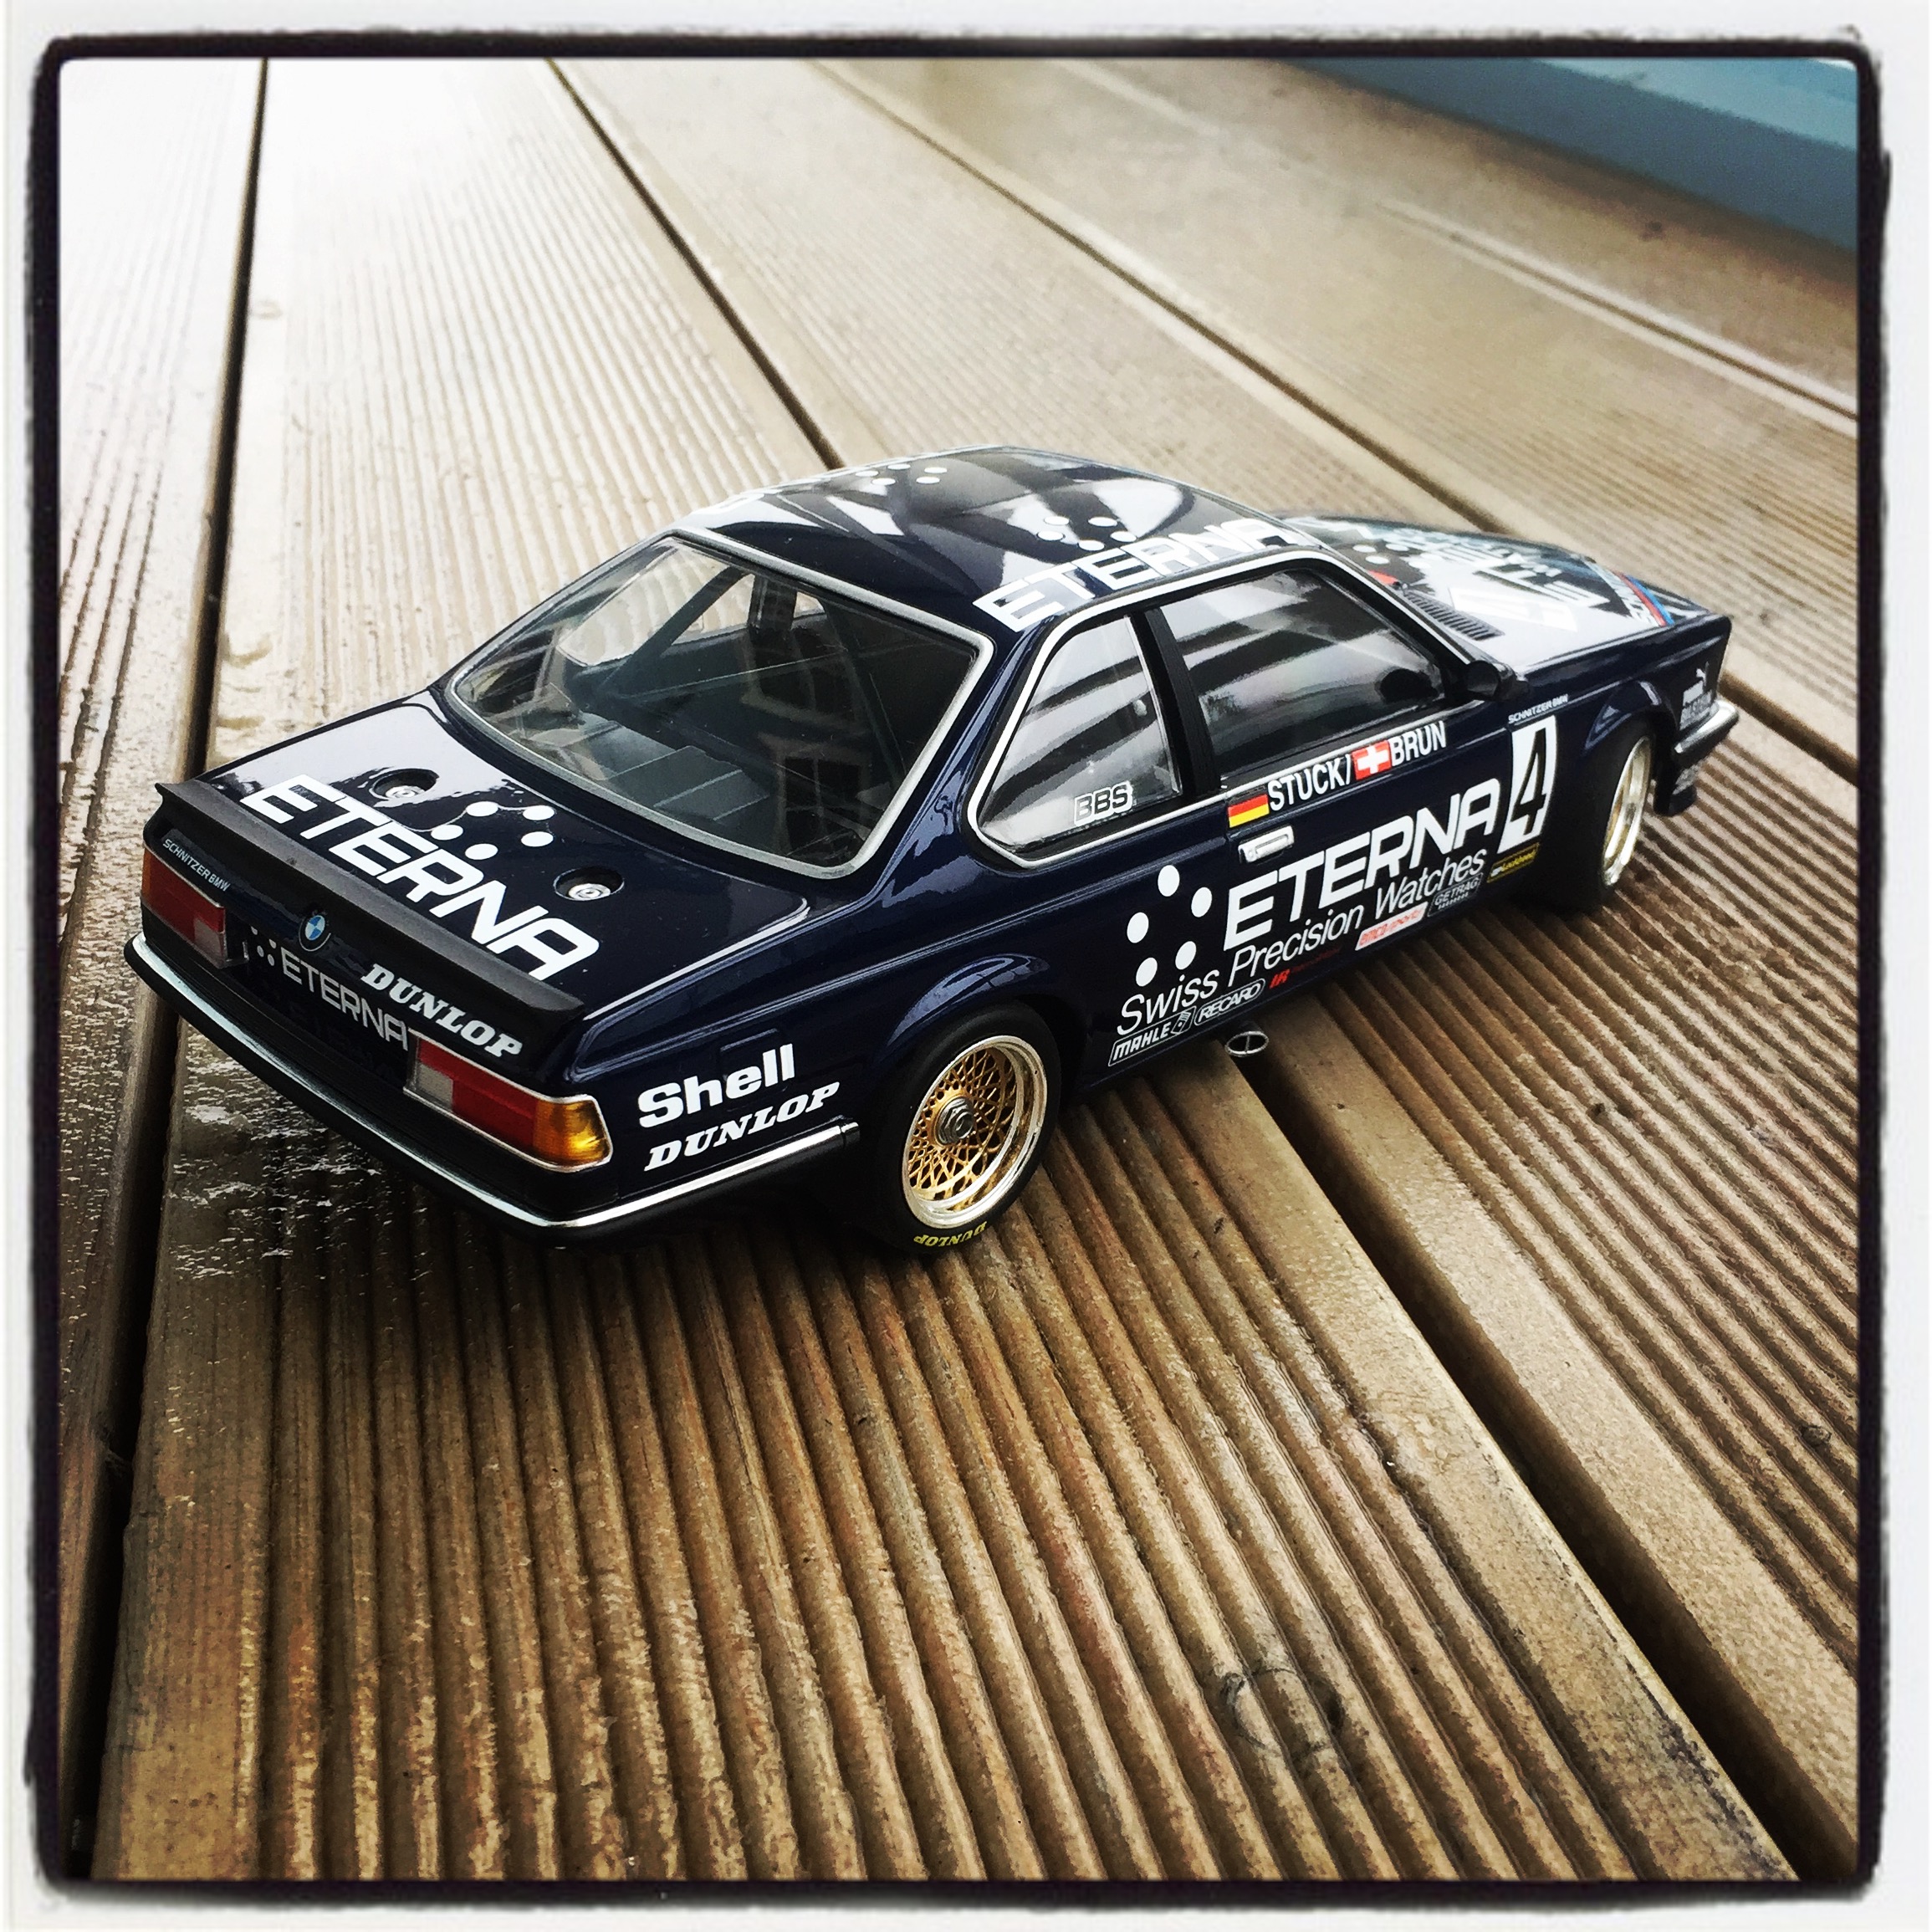 BMW 635 CSi (E24) Schnitzer Eterna, #4 Stuck/Brun, 3rd place Grand Prix Brno 1983, le 1 of 504pcs. (minichamps)